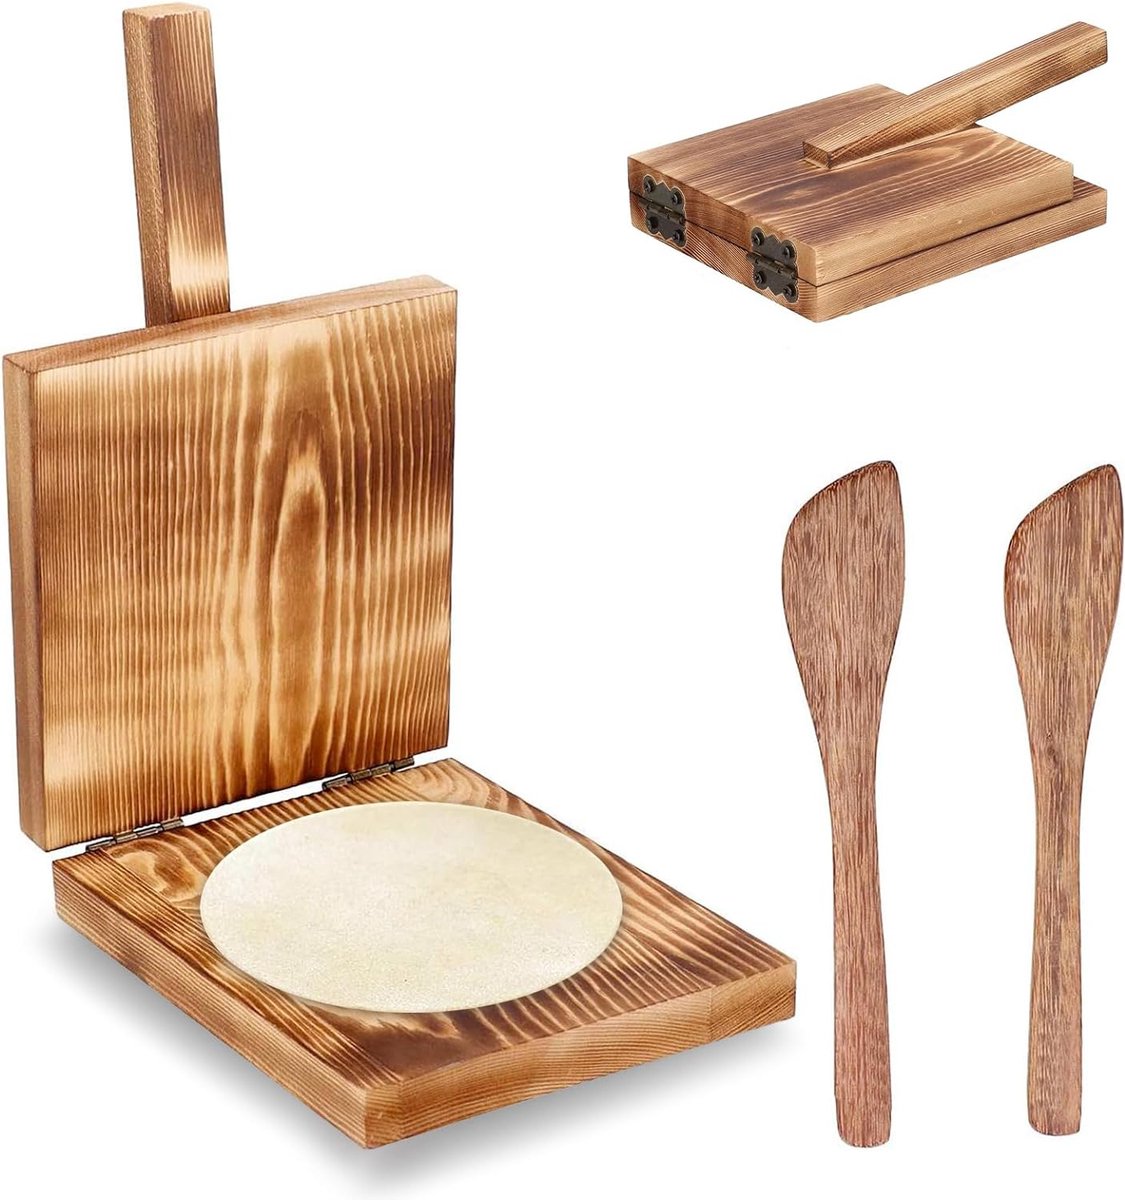 Tortilla pers - Tortillapers - Tortilla maker - Duurzaam hout - 15cm diameter - Roti maker - Ideaal voor in de keuken!